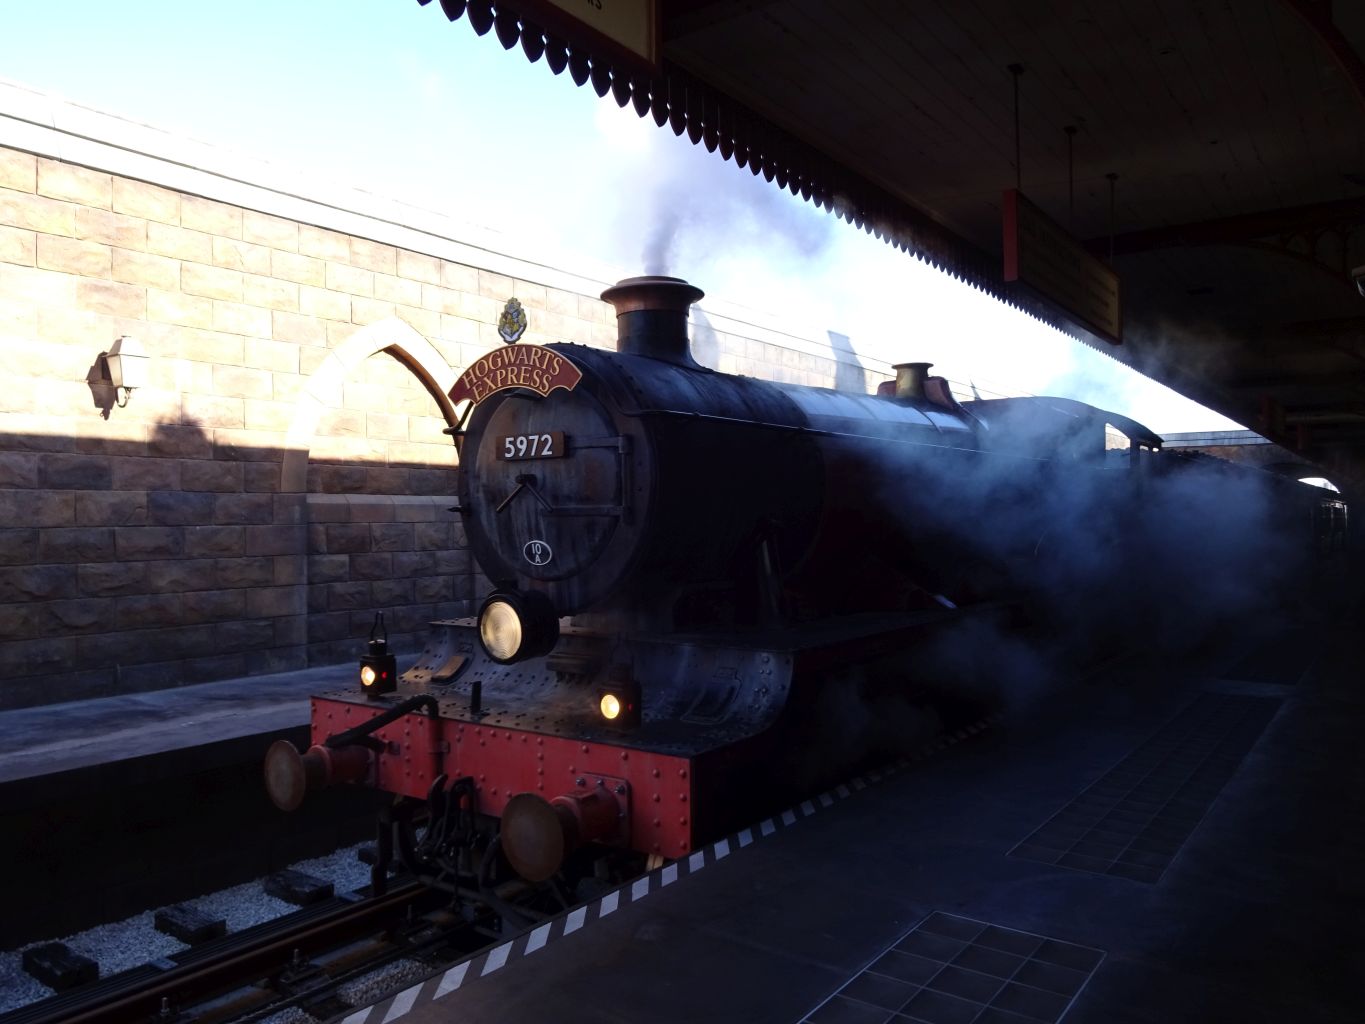 Hogwarts™ Express: Hogsmeade™ Station